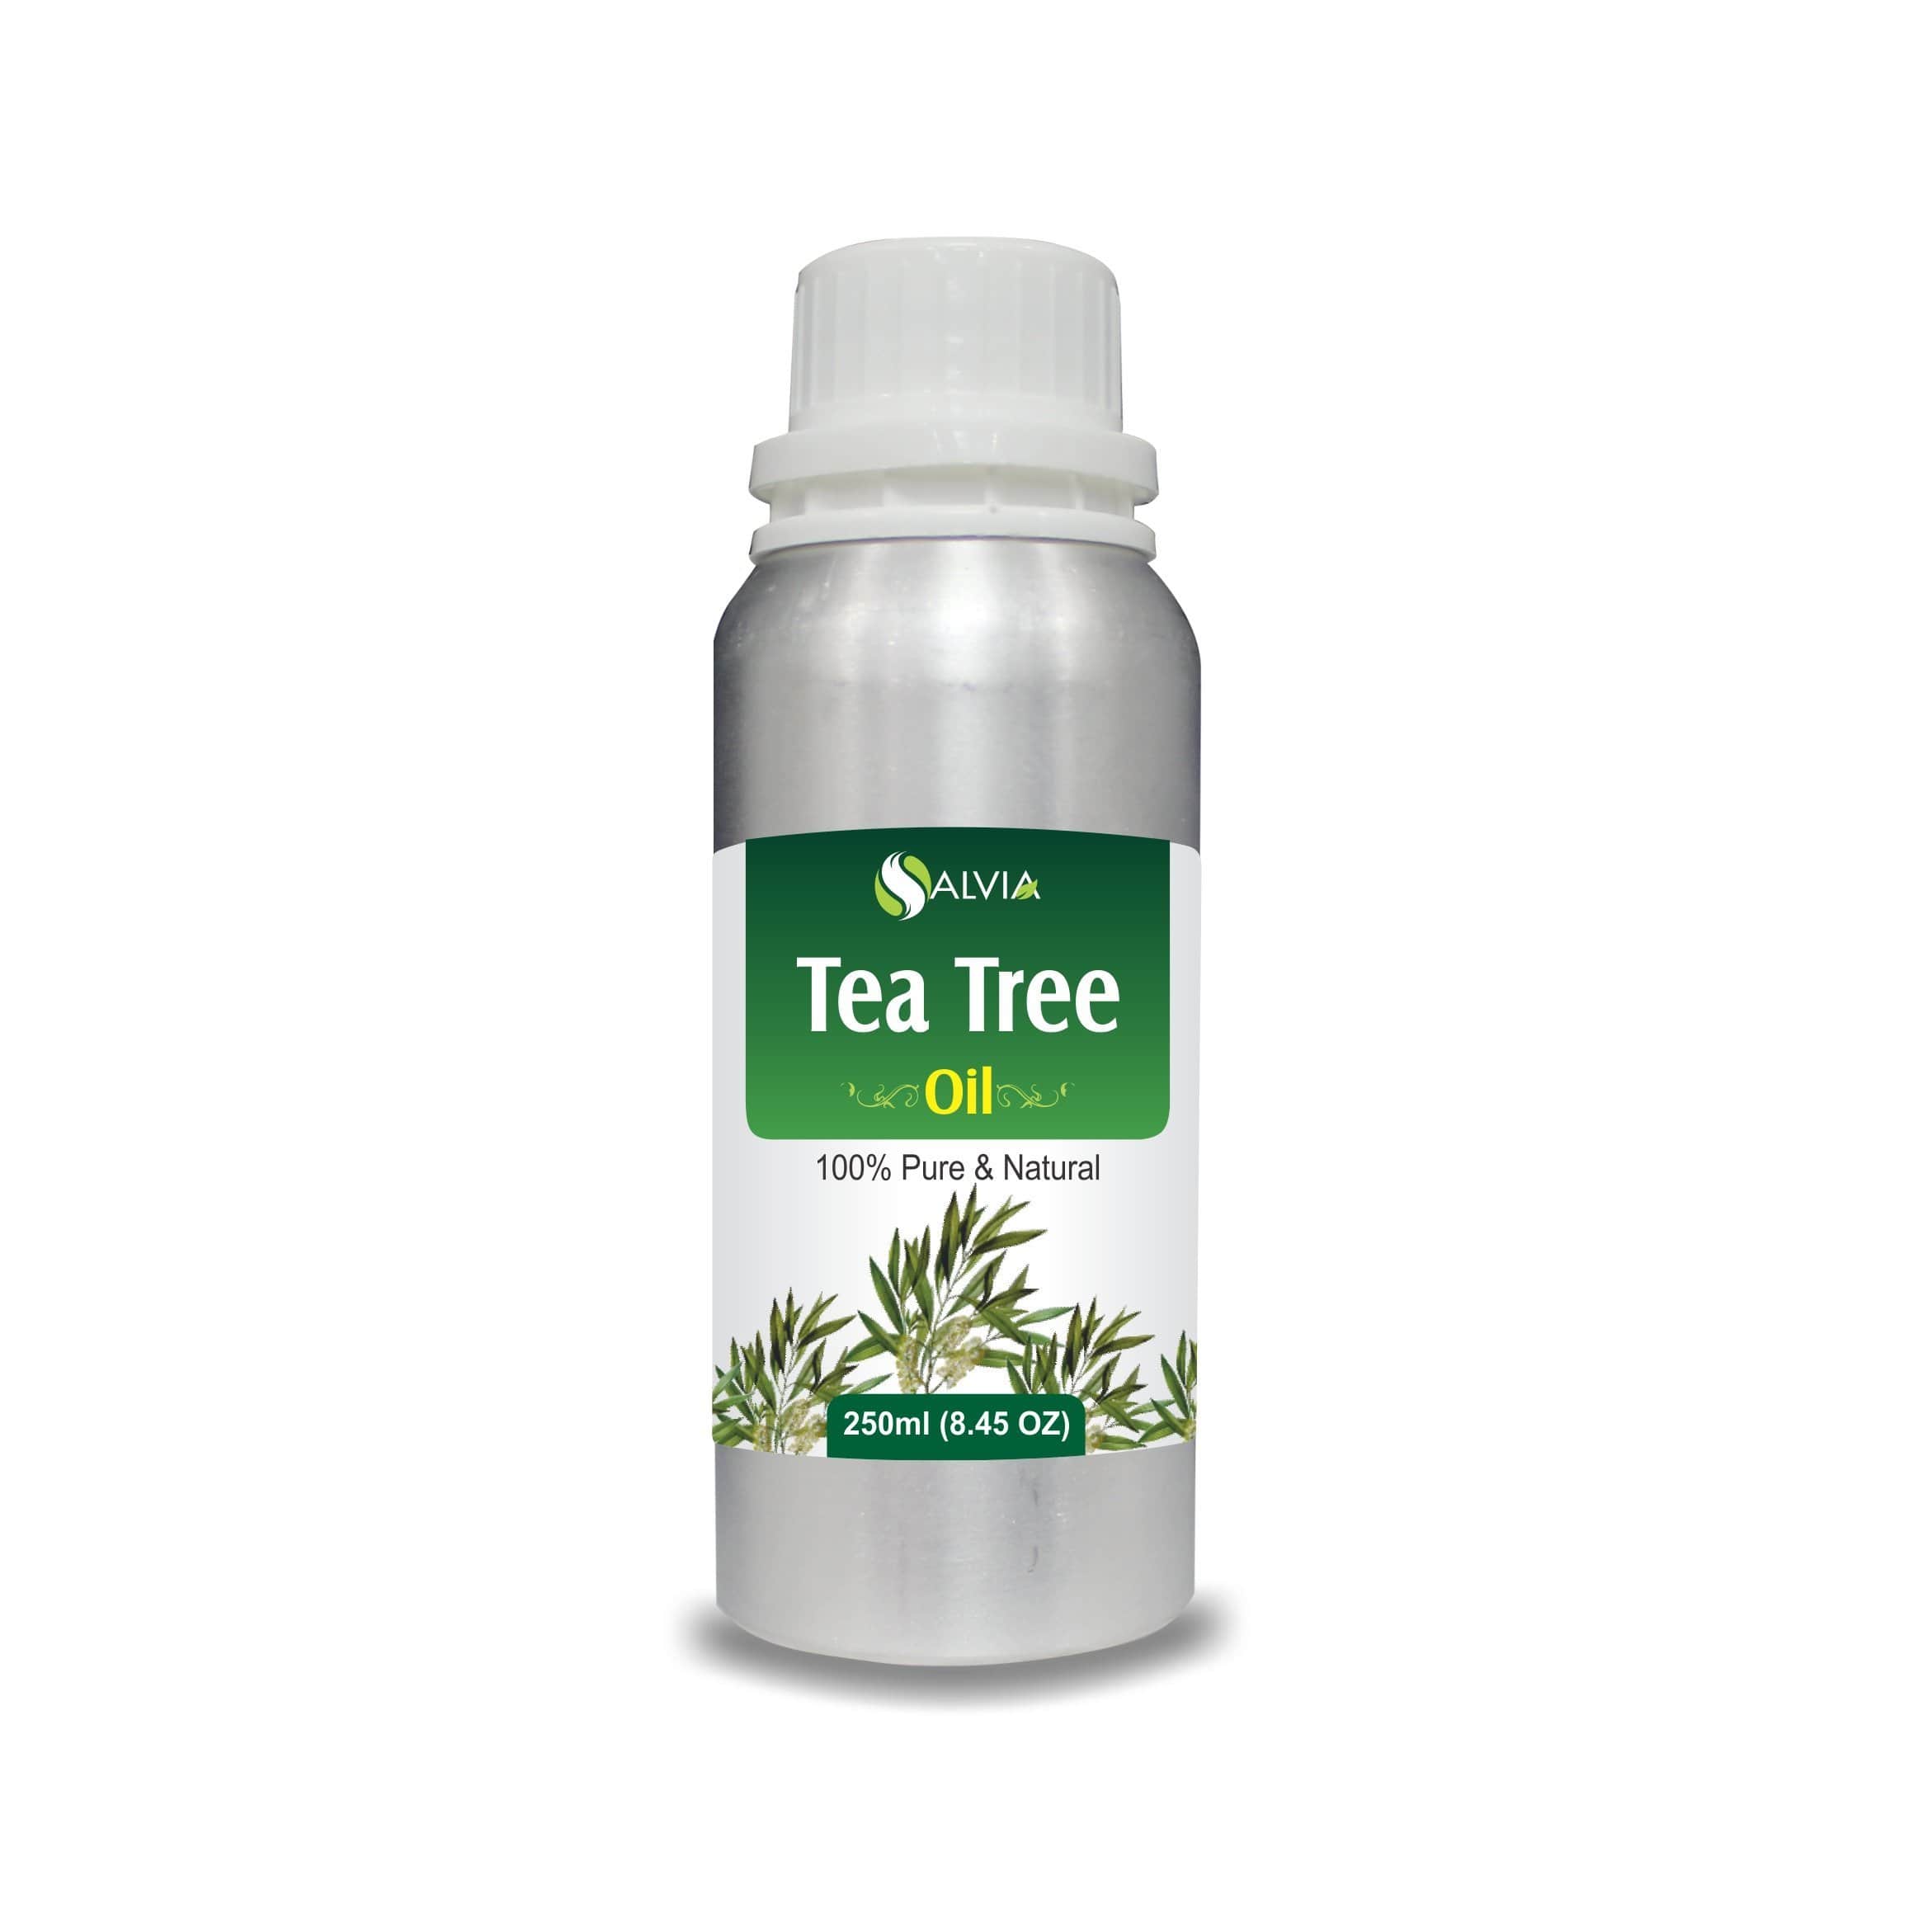 tea tree oil skin benefits